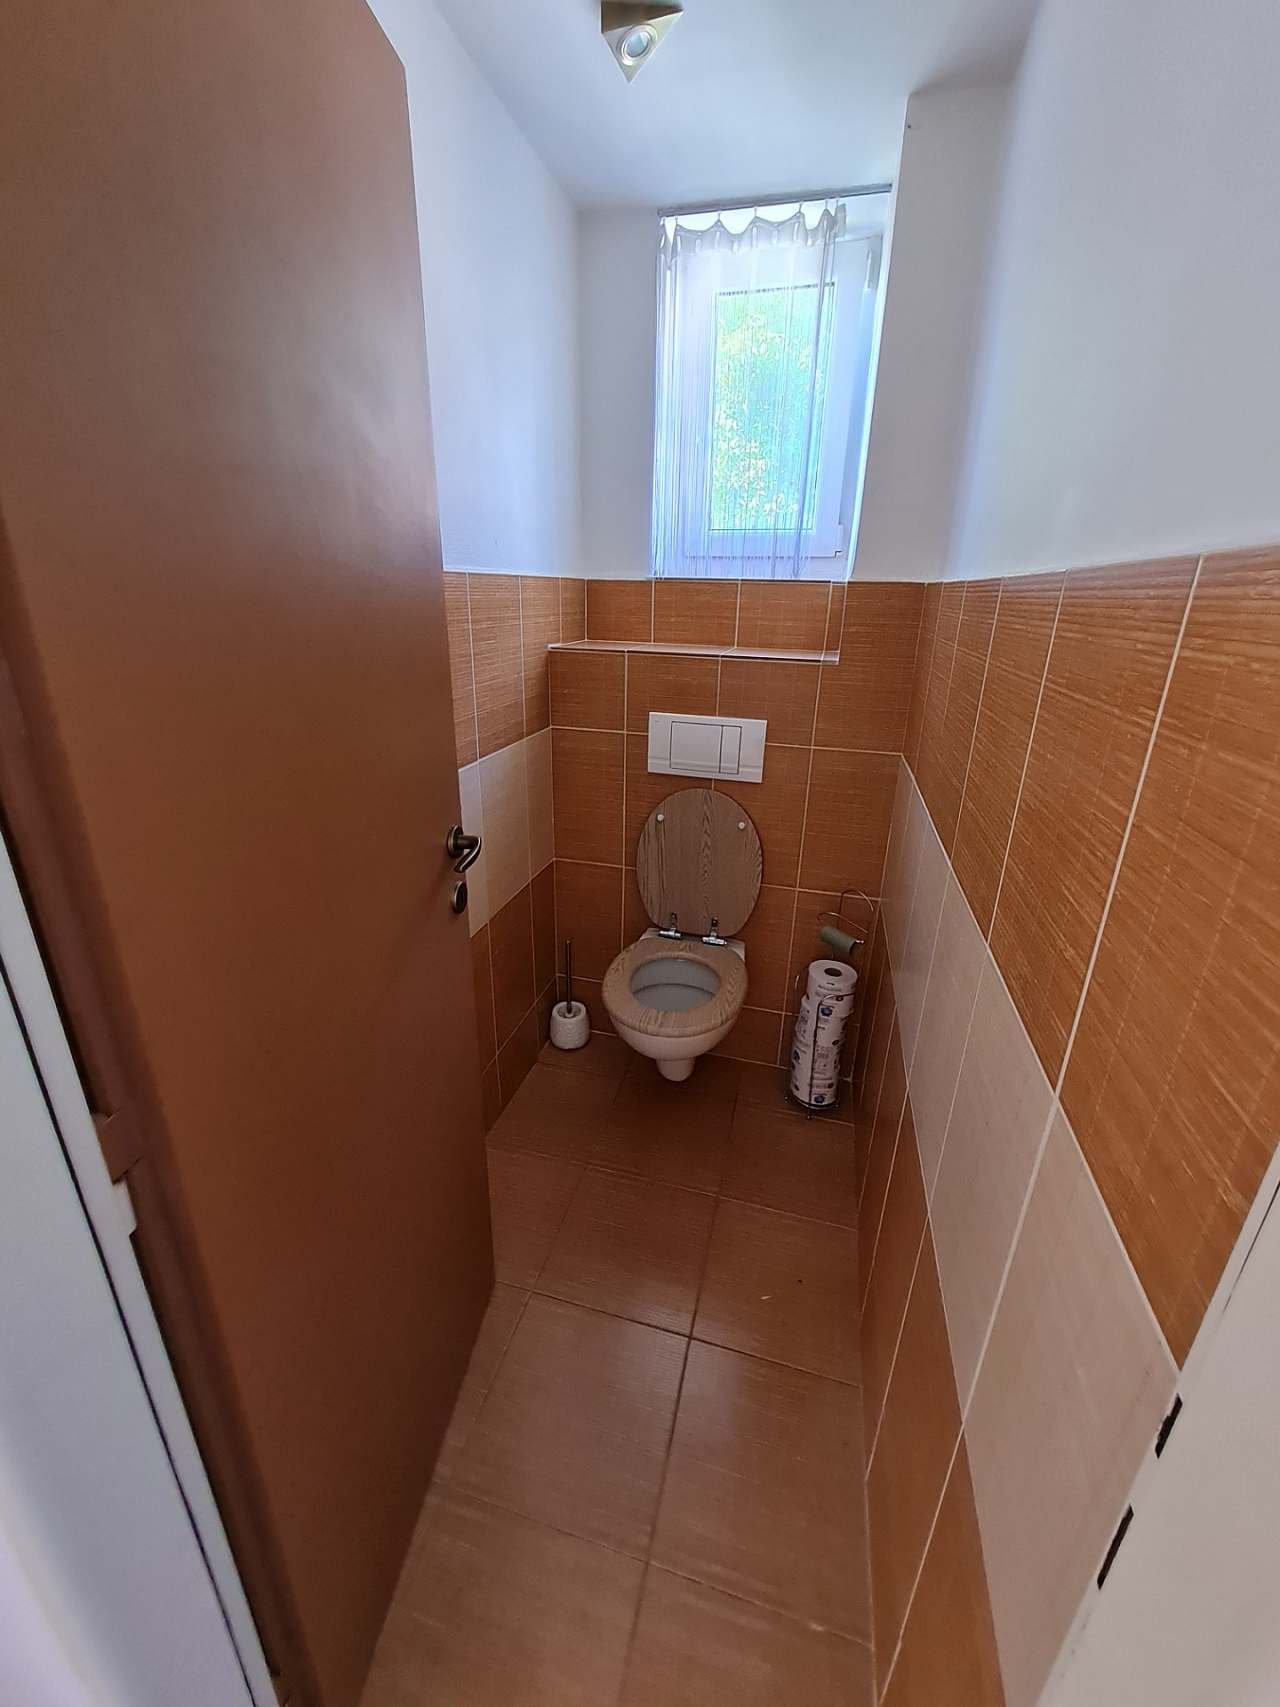 WC apartamento inferior